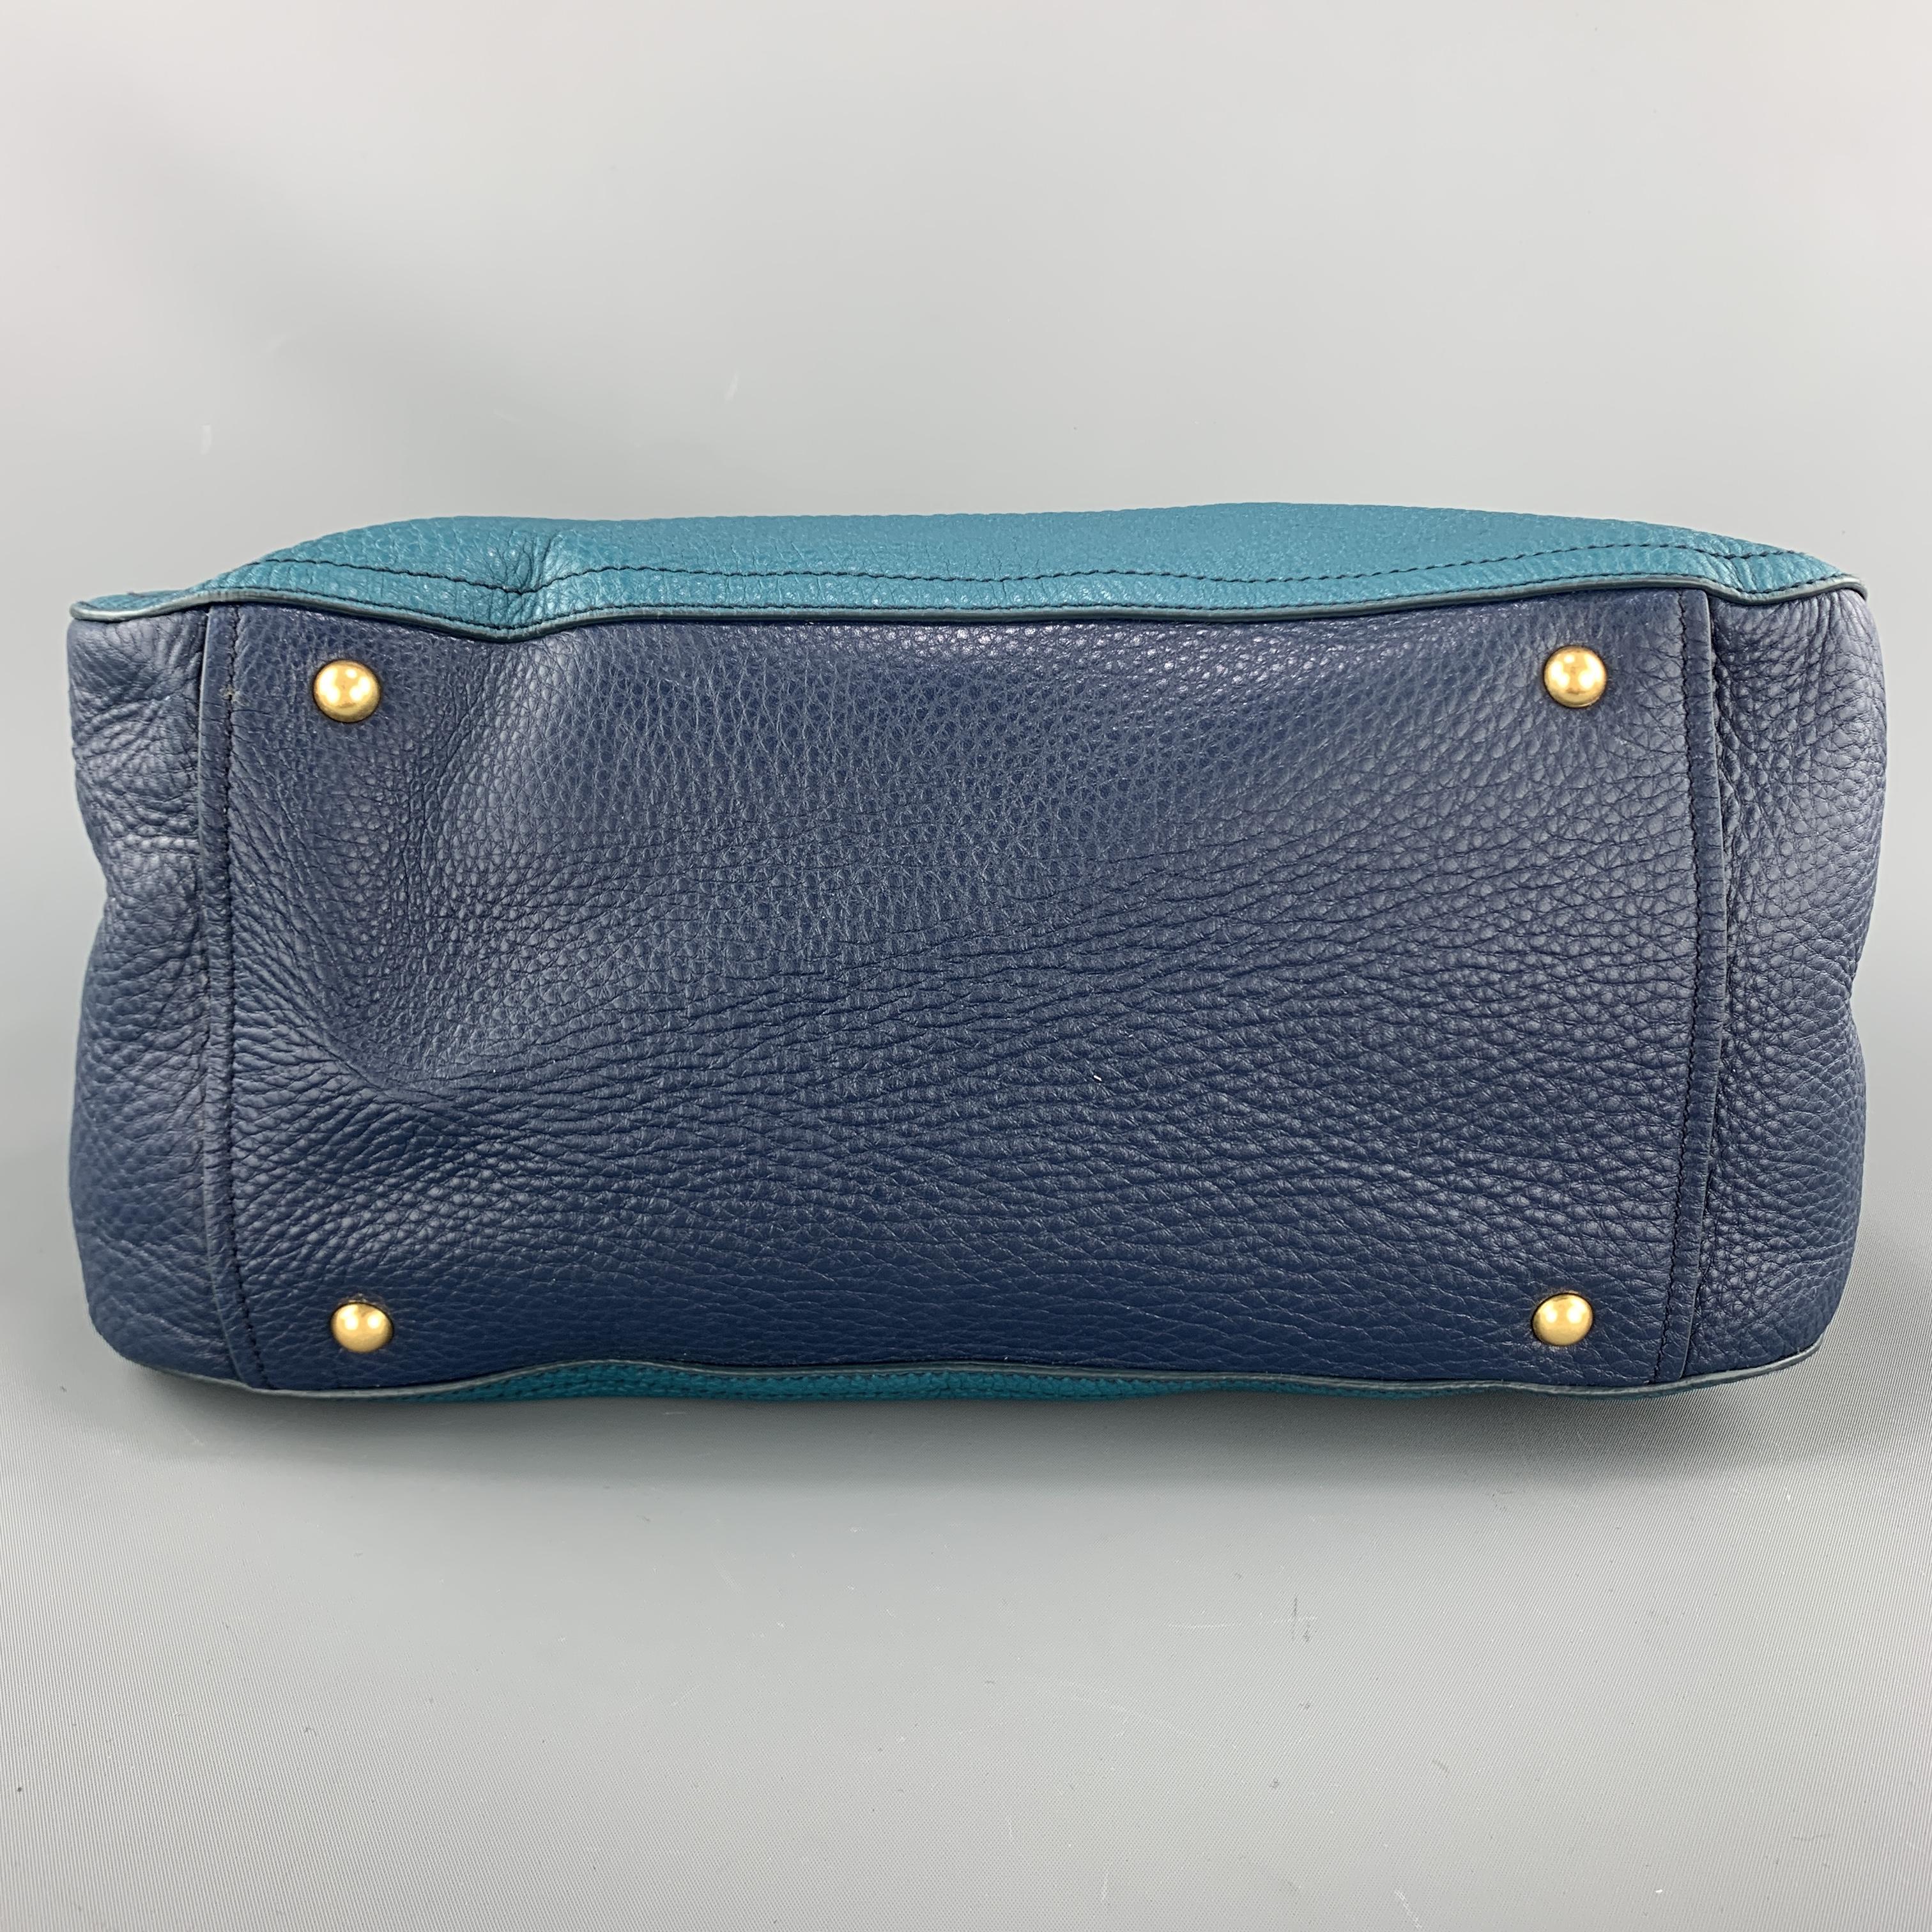 MIU MIU Teal & Blue Textured Leather Two Tone Vitello Caribo Tote Bag 1